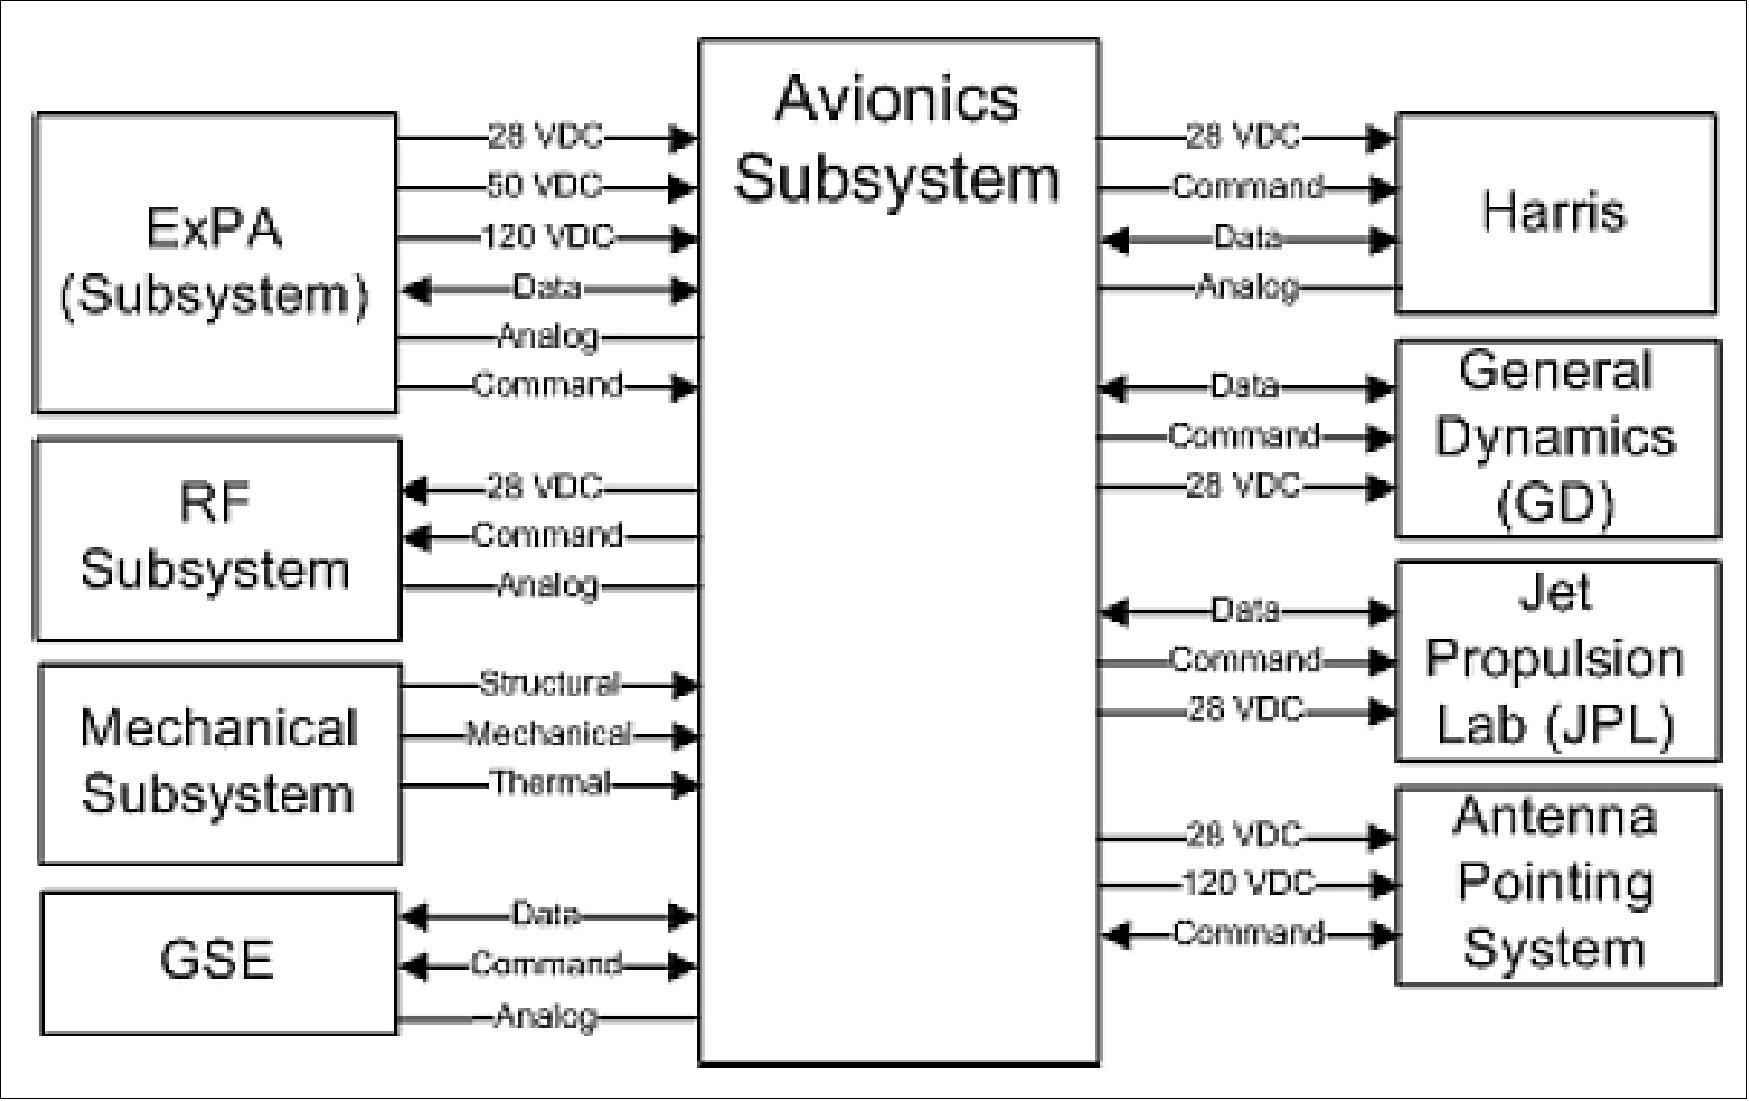 Figure 9: Block diagram of the avionics subsystem (image credit: NASA)